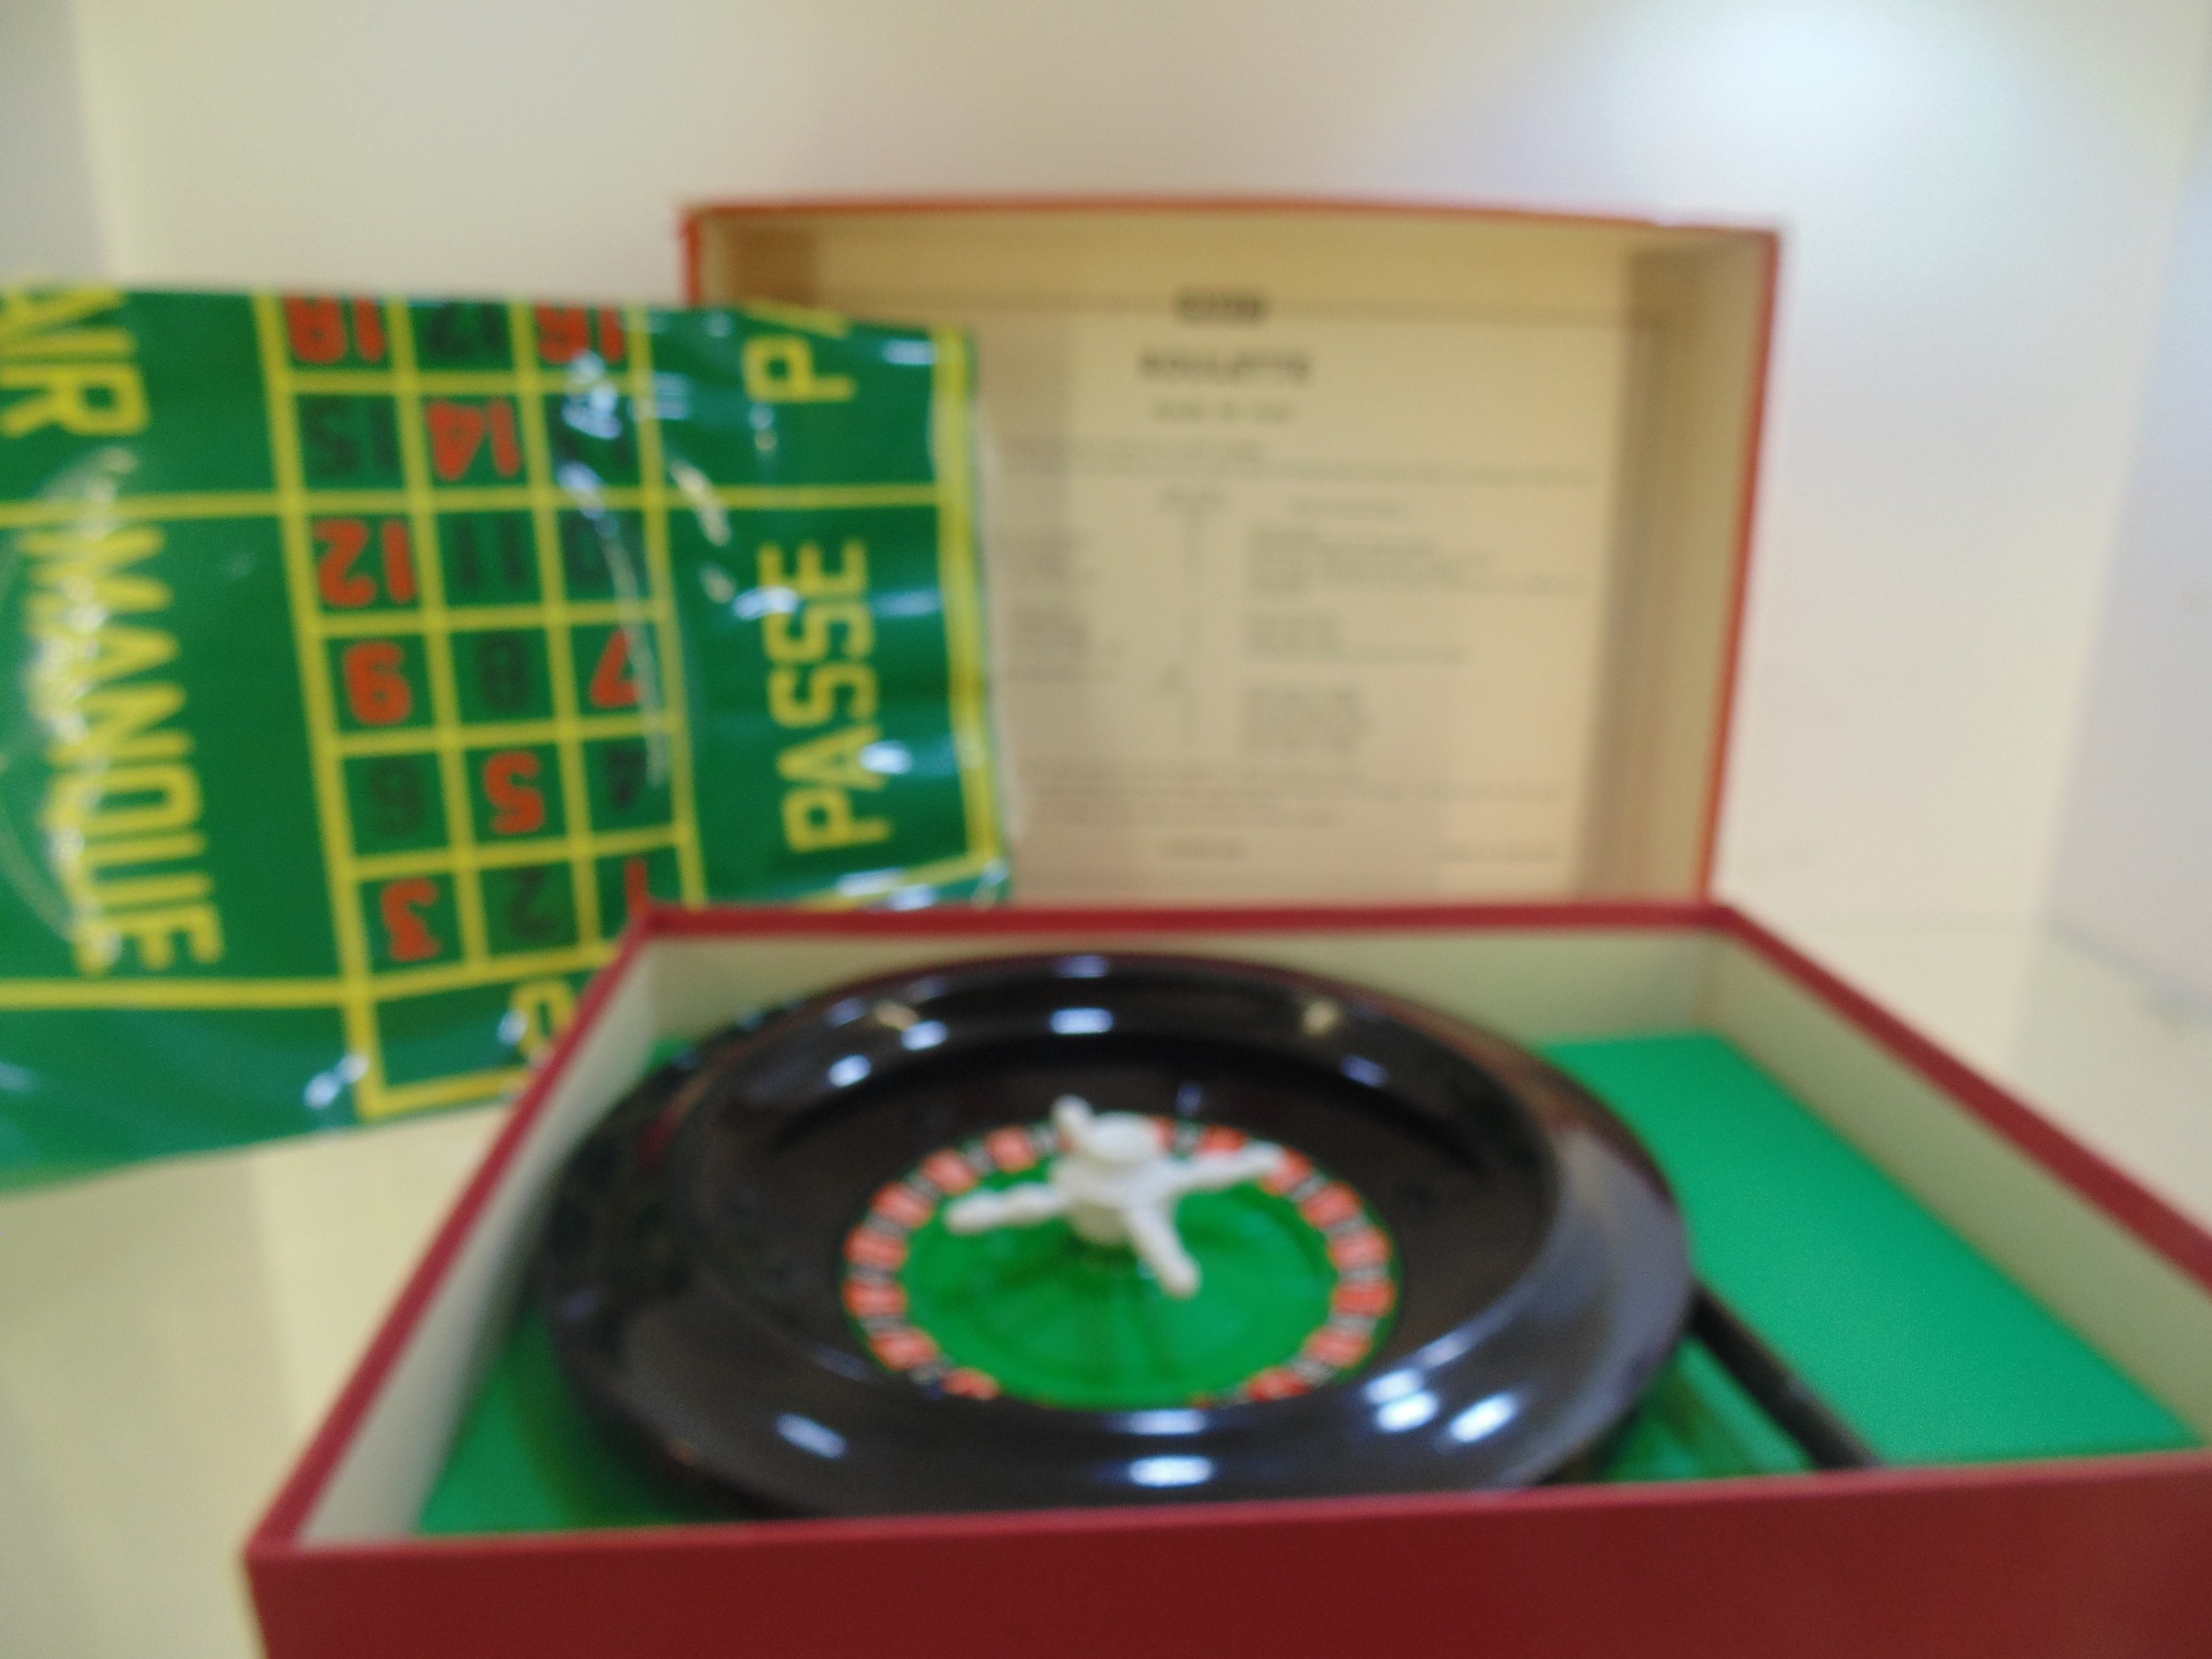 Merit vintage roulette - Image 2 of 2